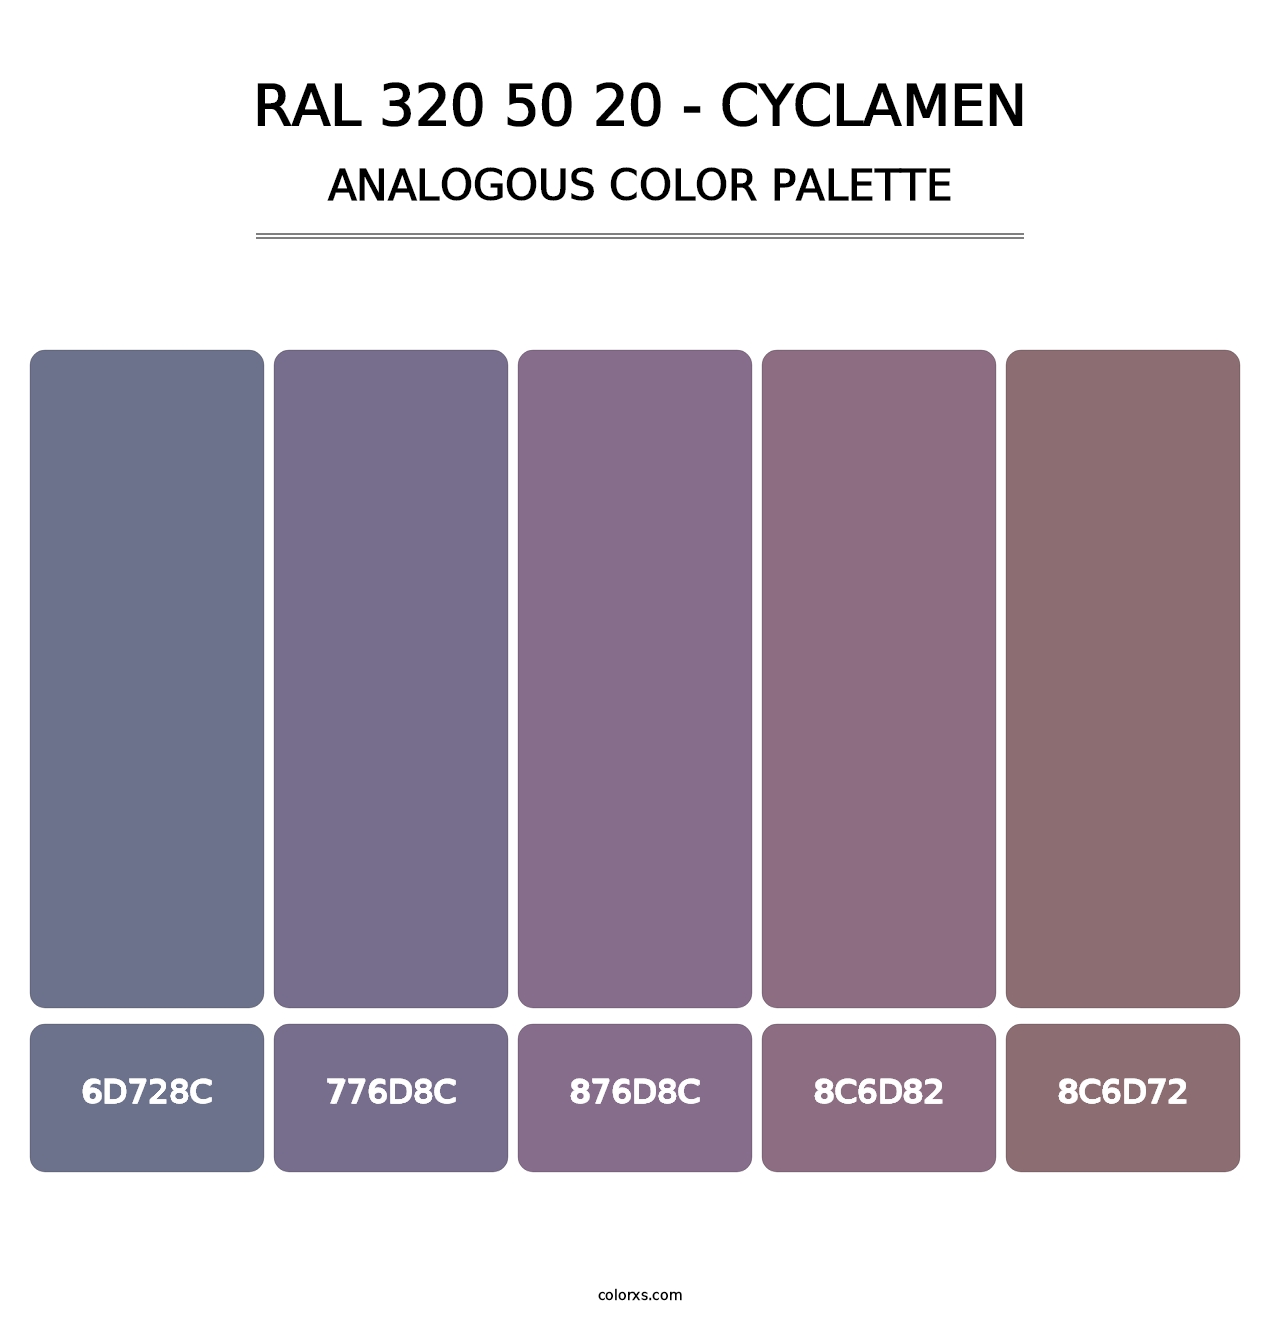 RAL 320 50 20 - Cyclamen - Analogous Color Palette